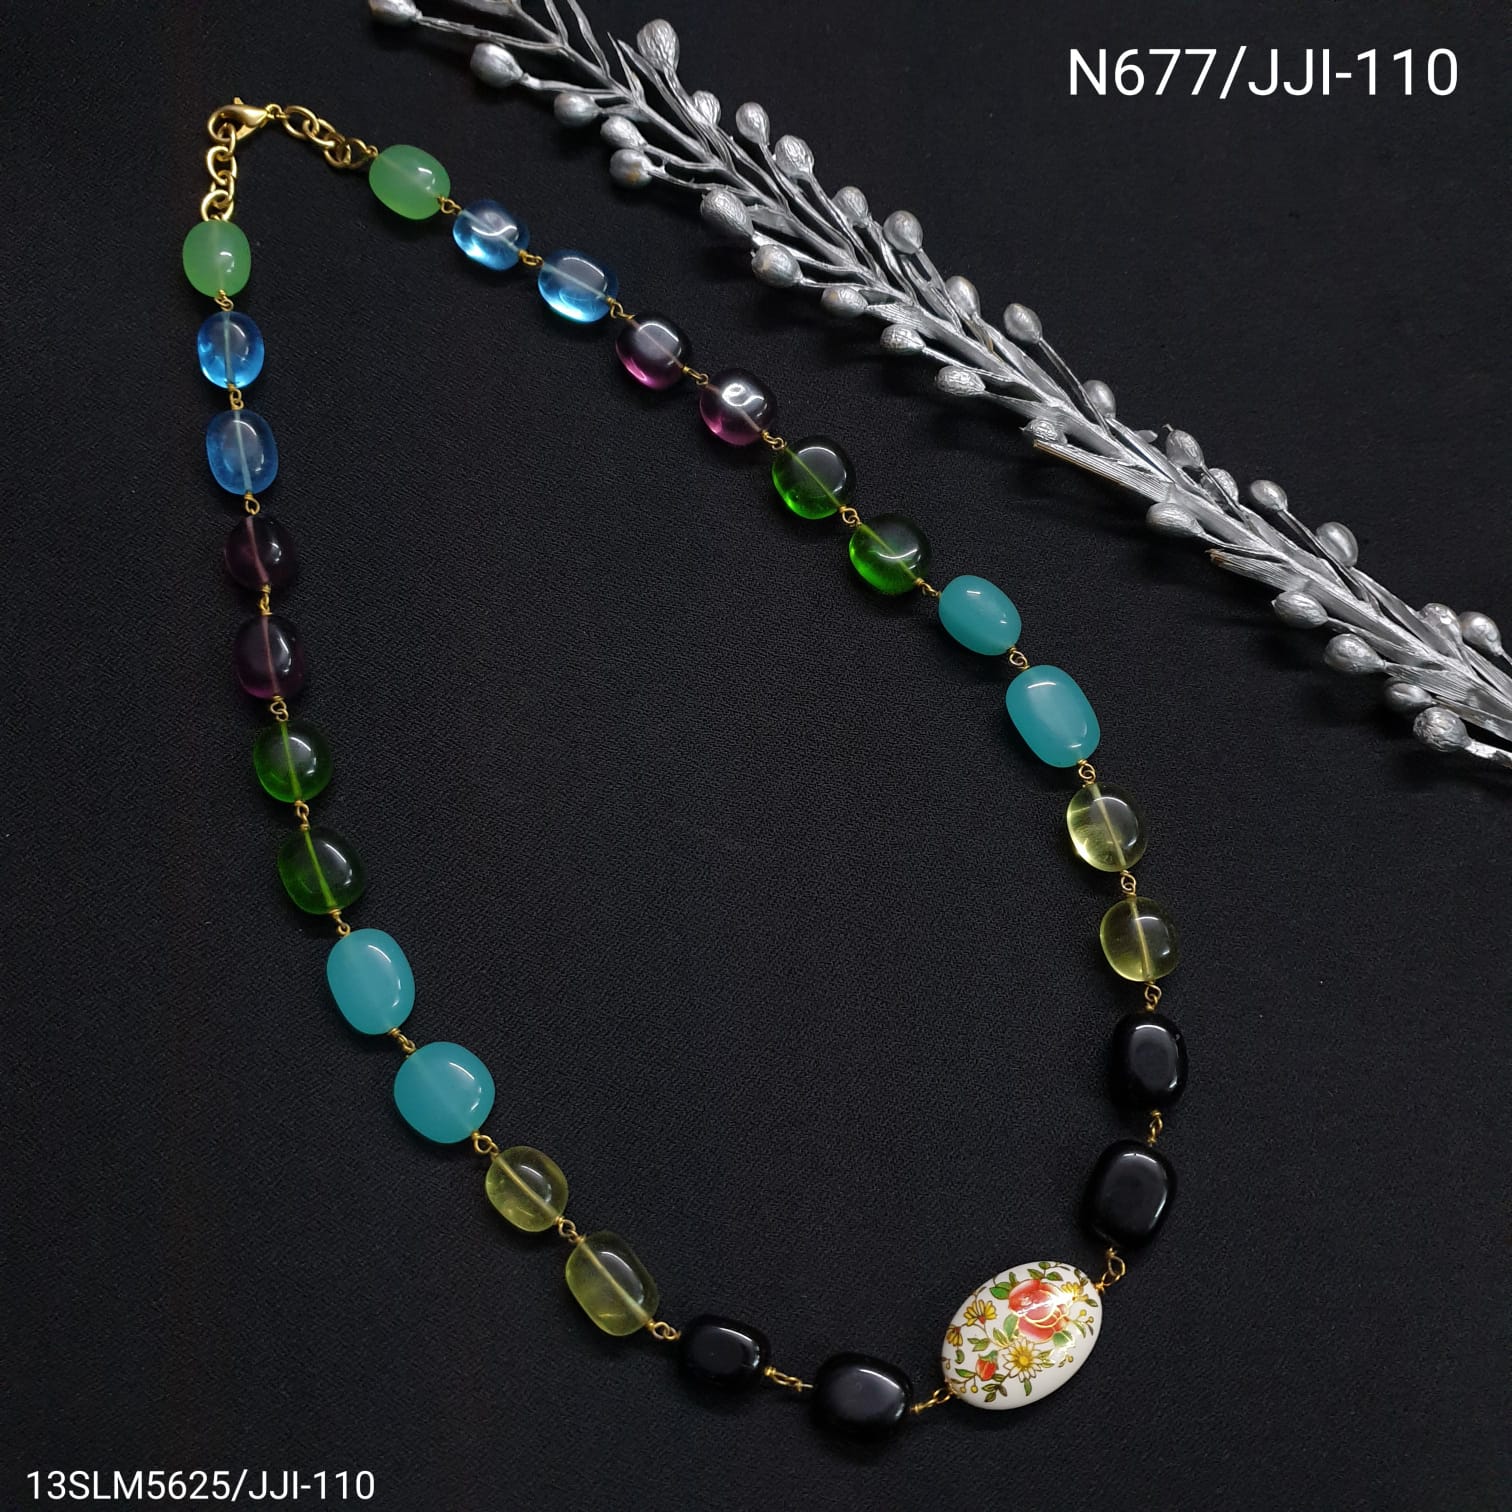 Stone Bead Necklace